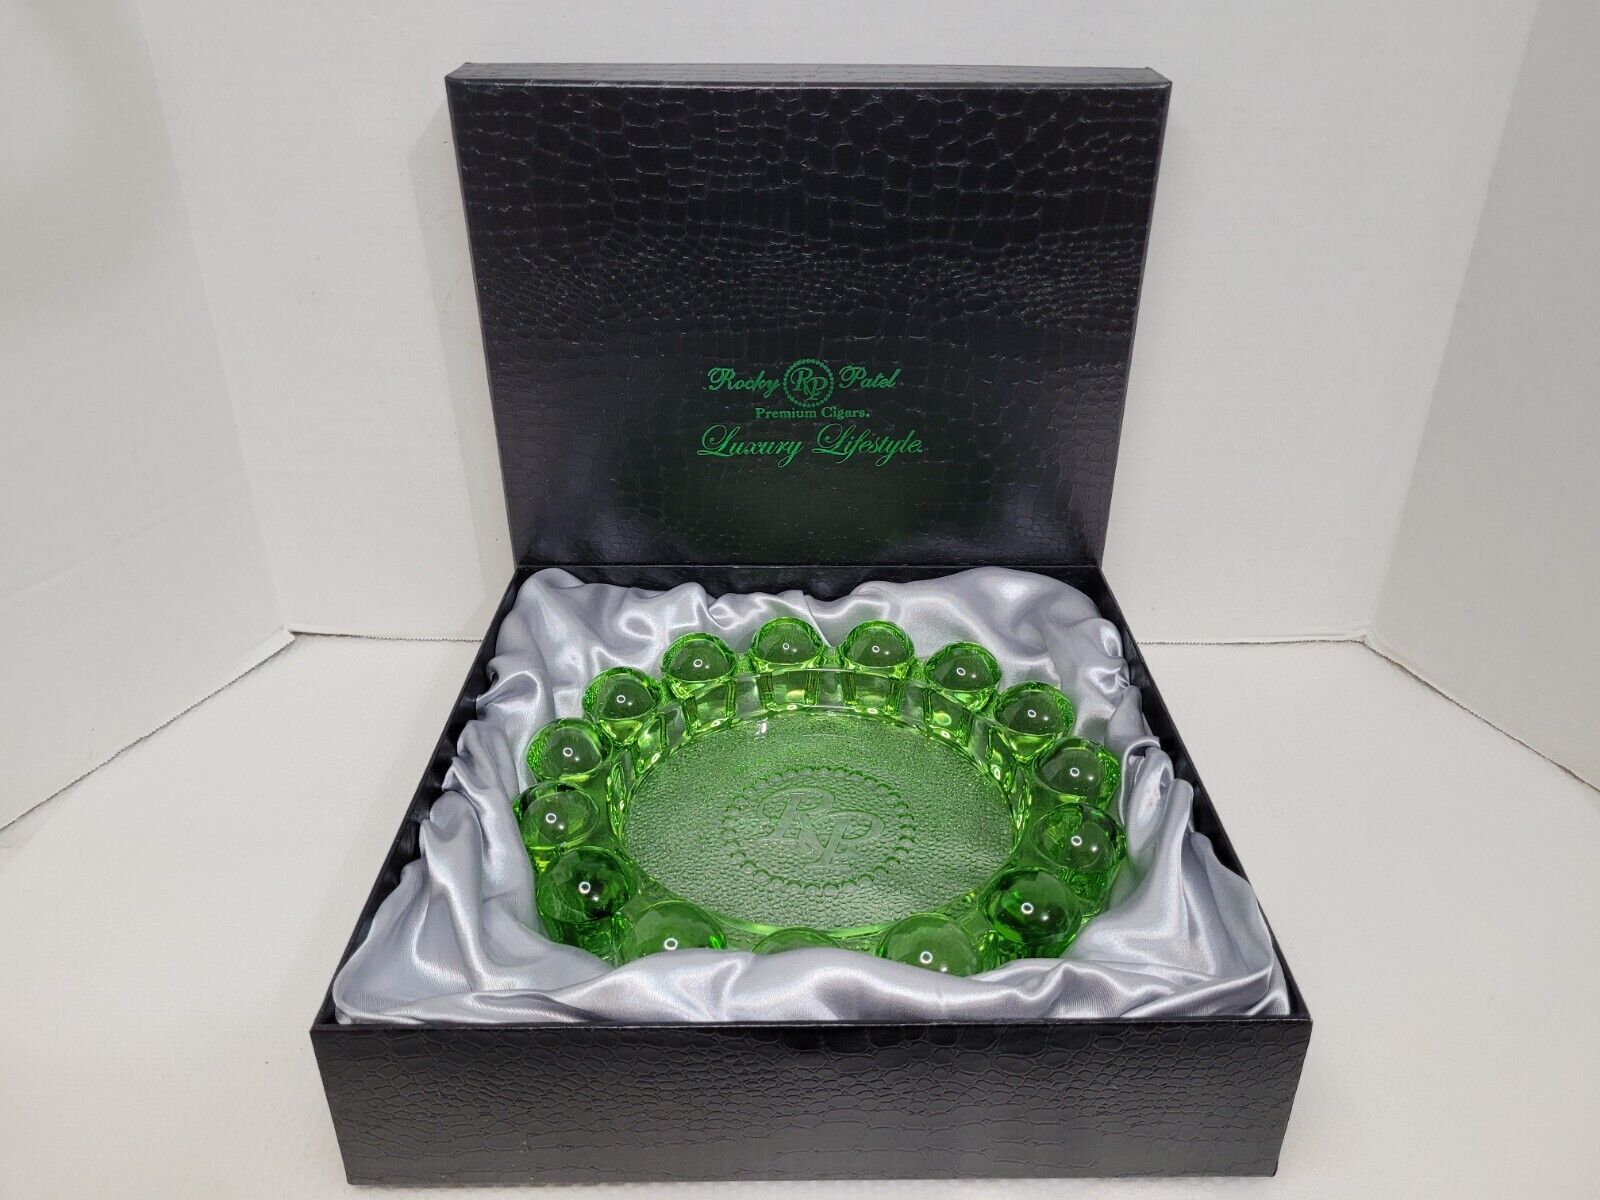 ROCKY PATEL LUXURY LIFESTYLE CIGAR ASHTRAY AMBER LUMINOSO GREEN GLASS